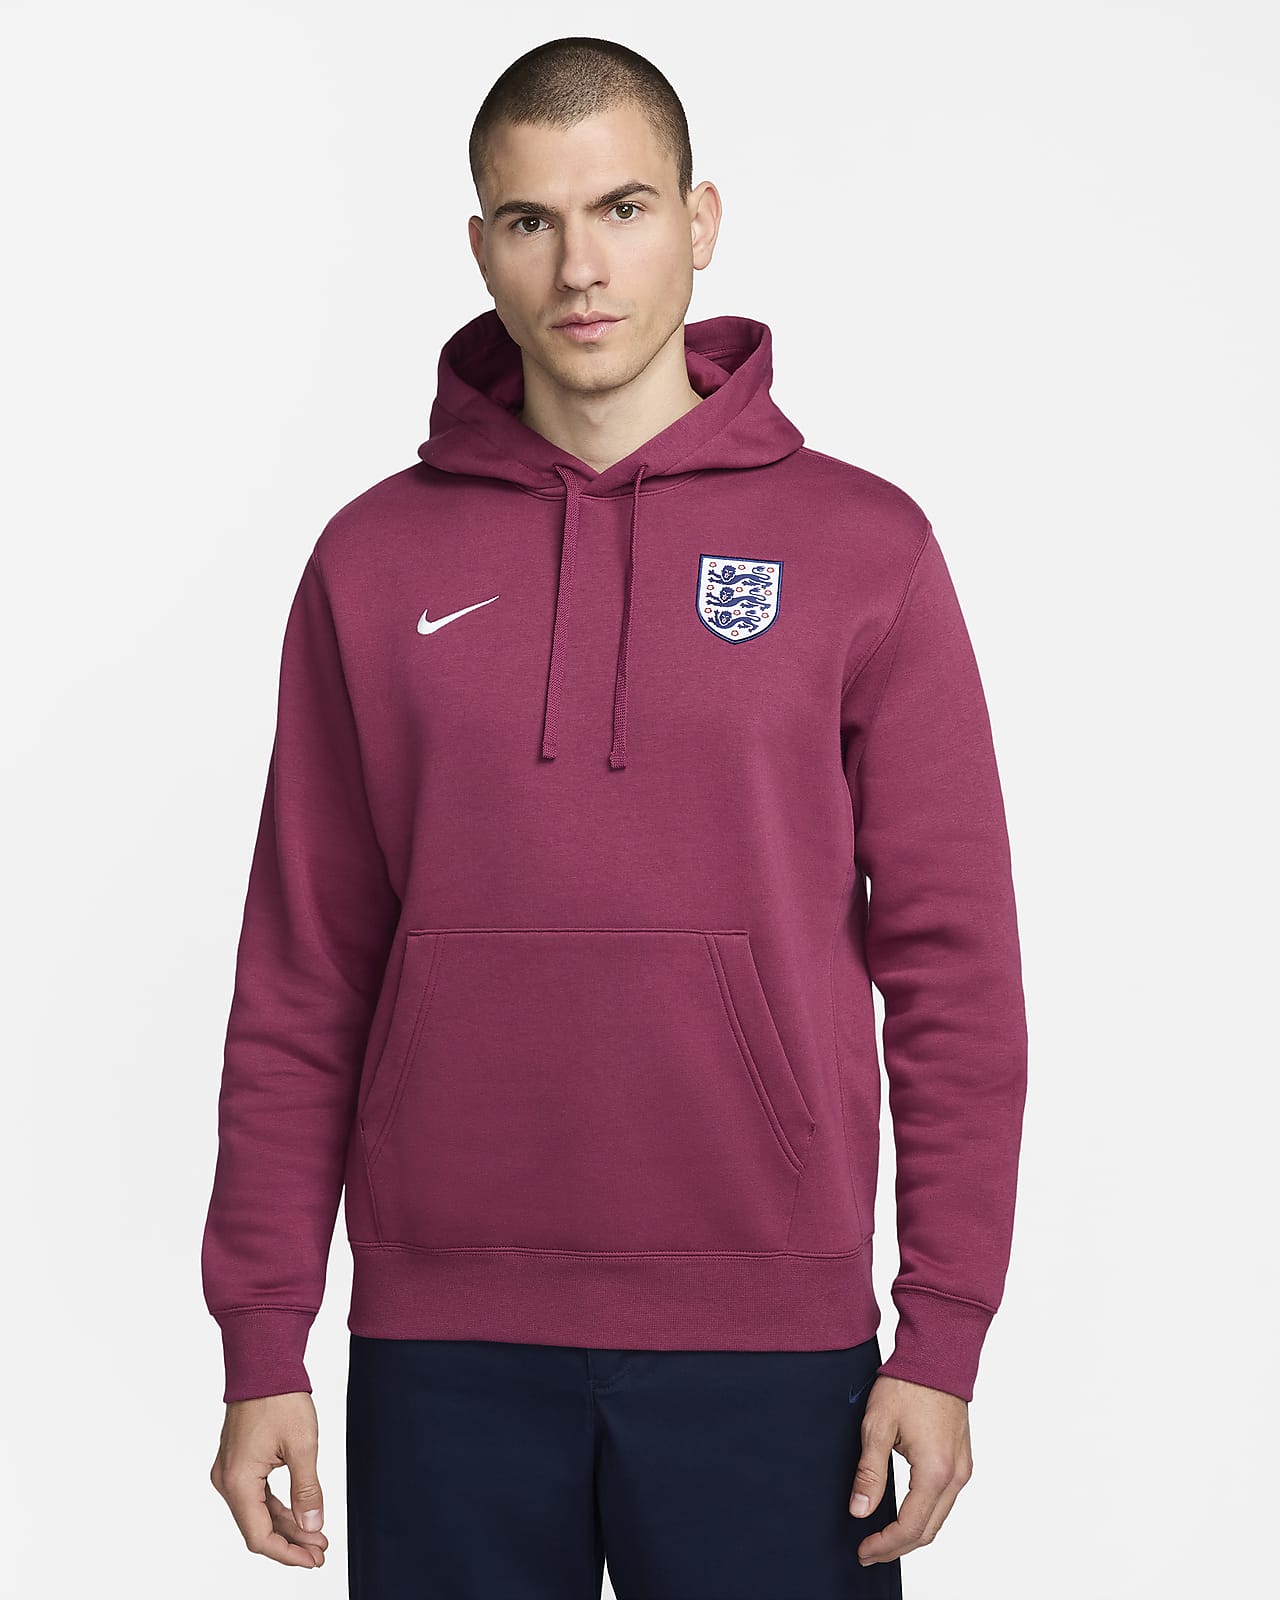 Męska nierozpinana bluza piłkarska Nike Anglia Club